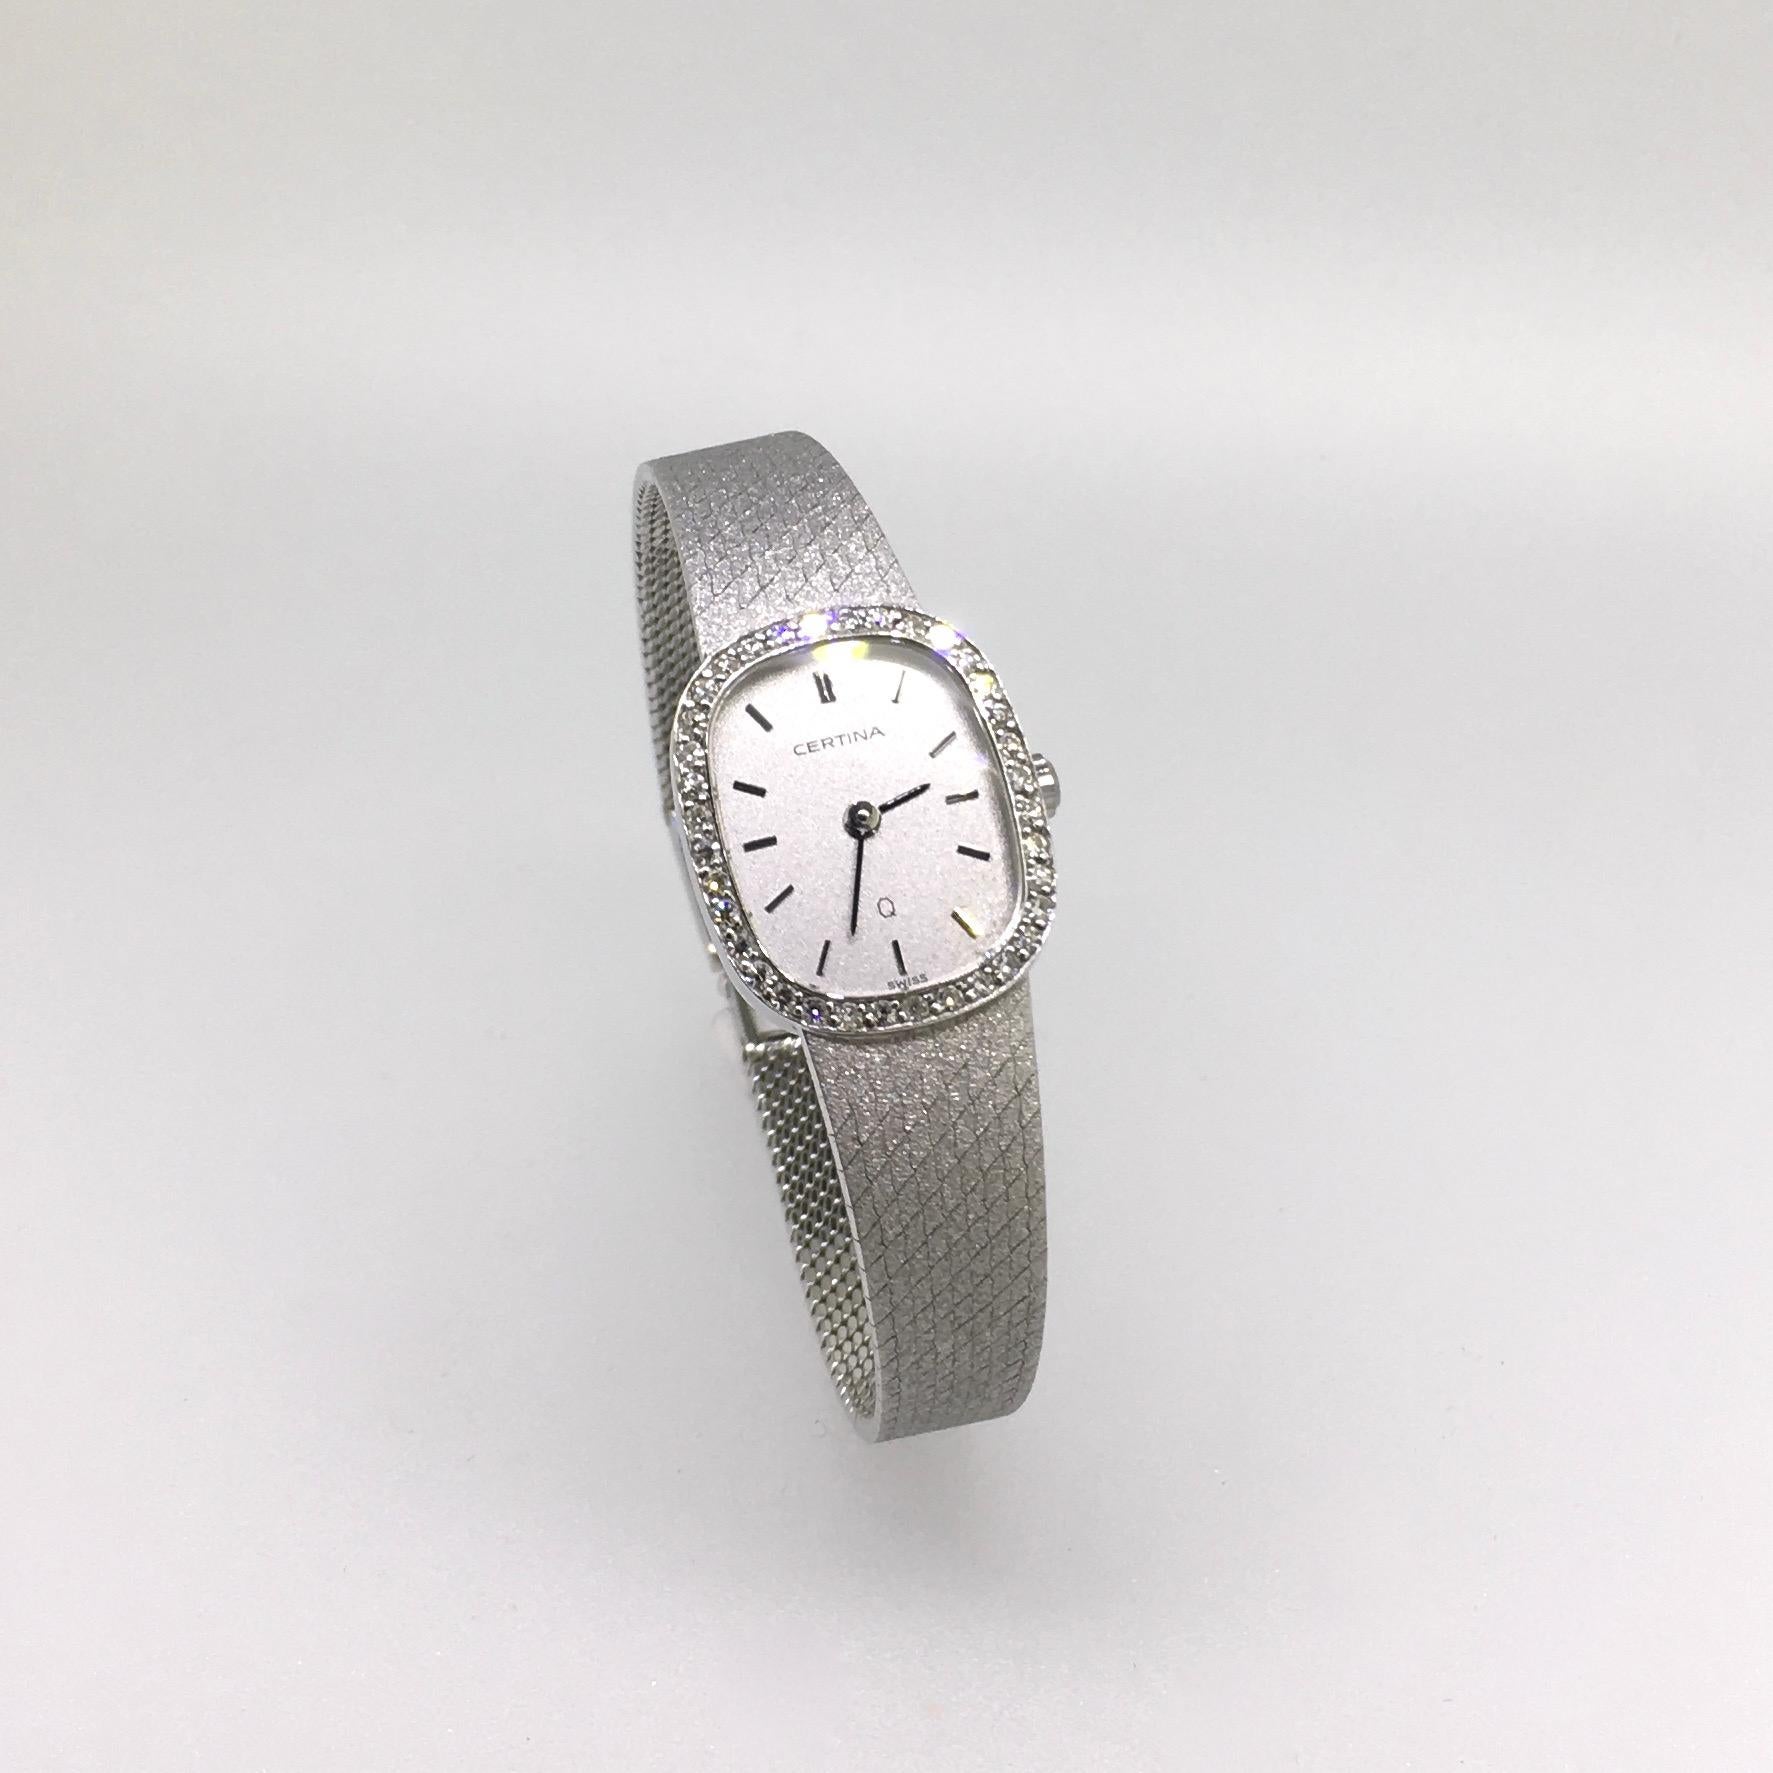 Brilliant Cut Watch, White Gold, Diamonds, Lady, Certina, Bracelet Watch, Vintage, 1983